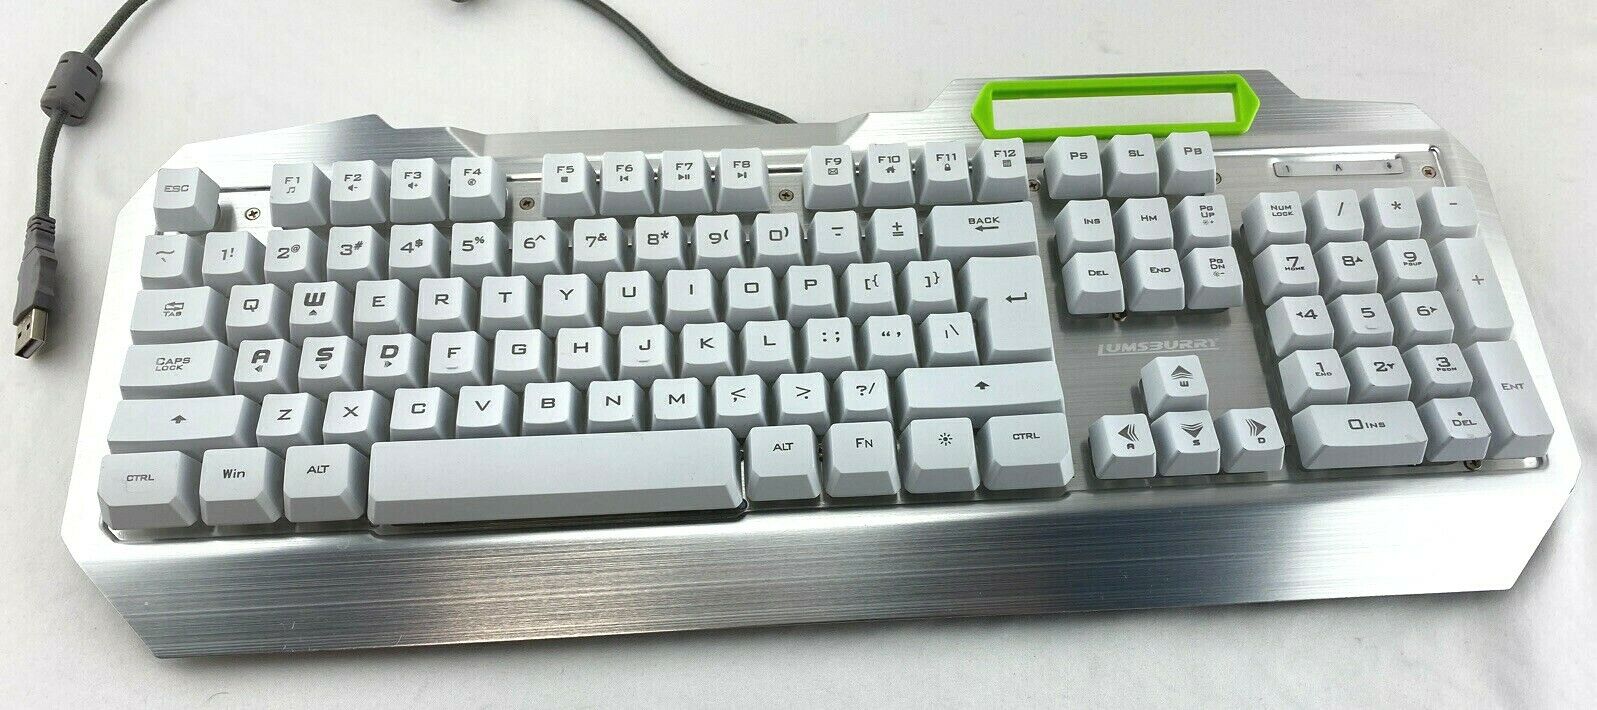 Lumsburry Gaming Keyboard RGB LED Backlit Keys Multimedia Control Silver-White